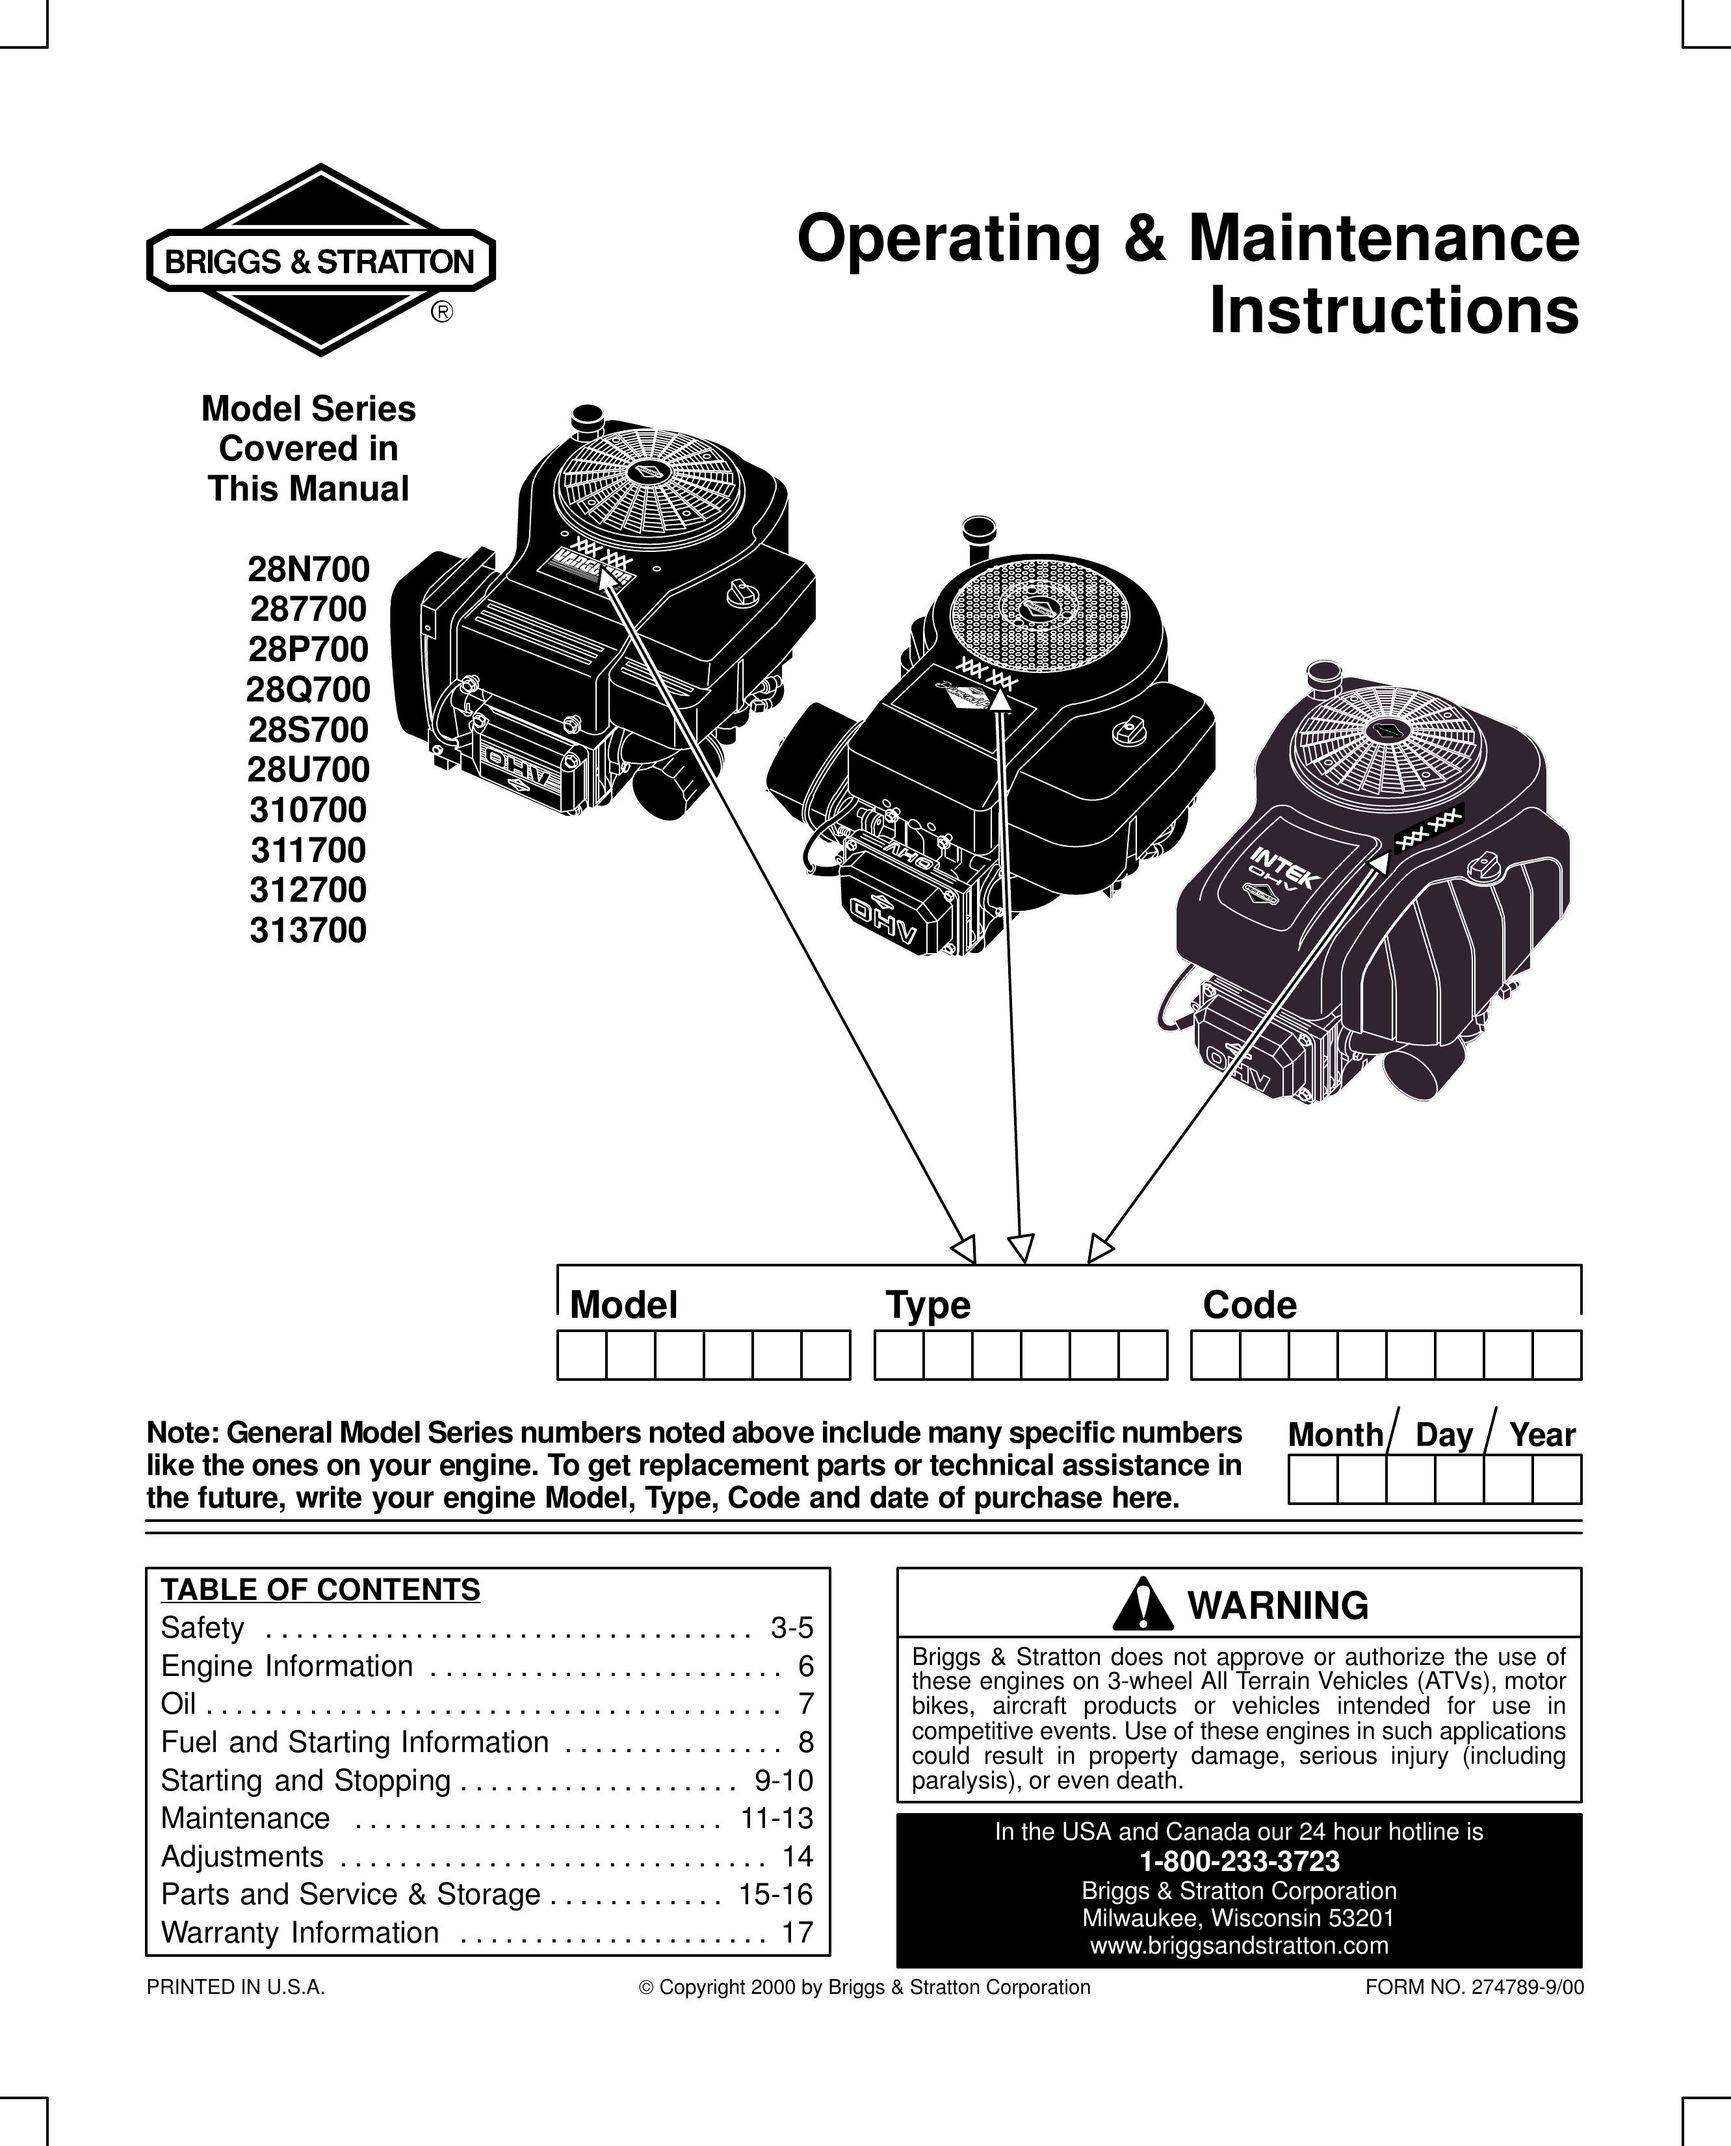 Briggs & Stratton 287700 Air Cleaner User Manual